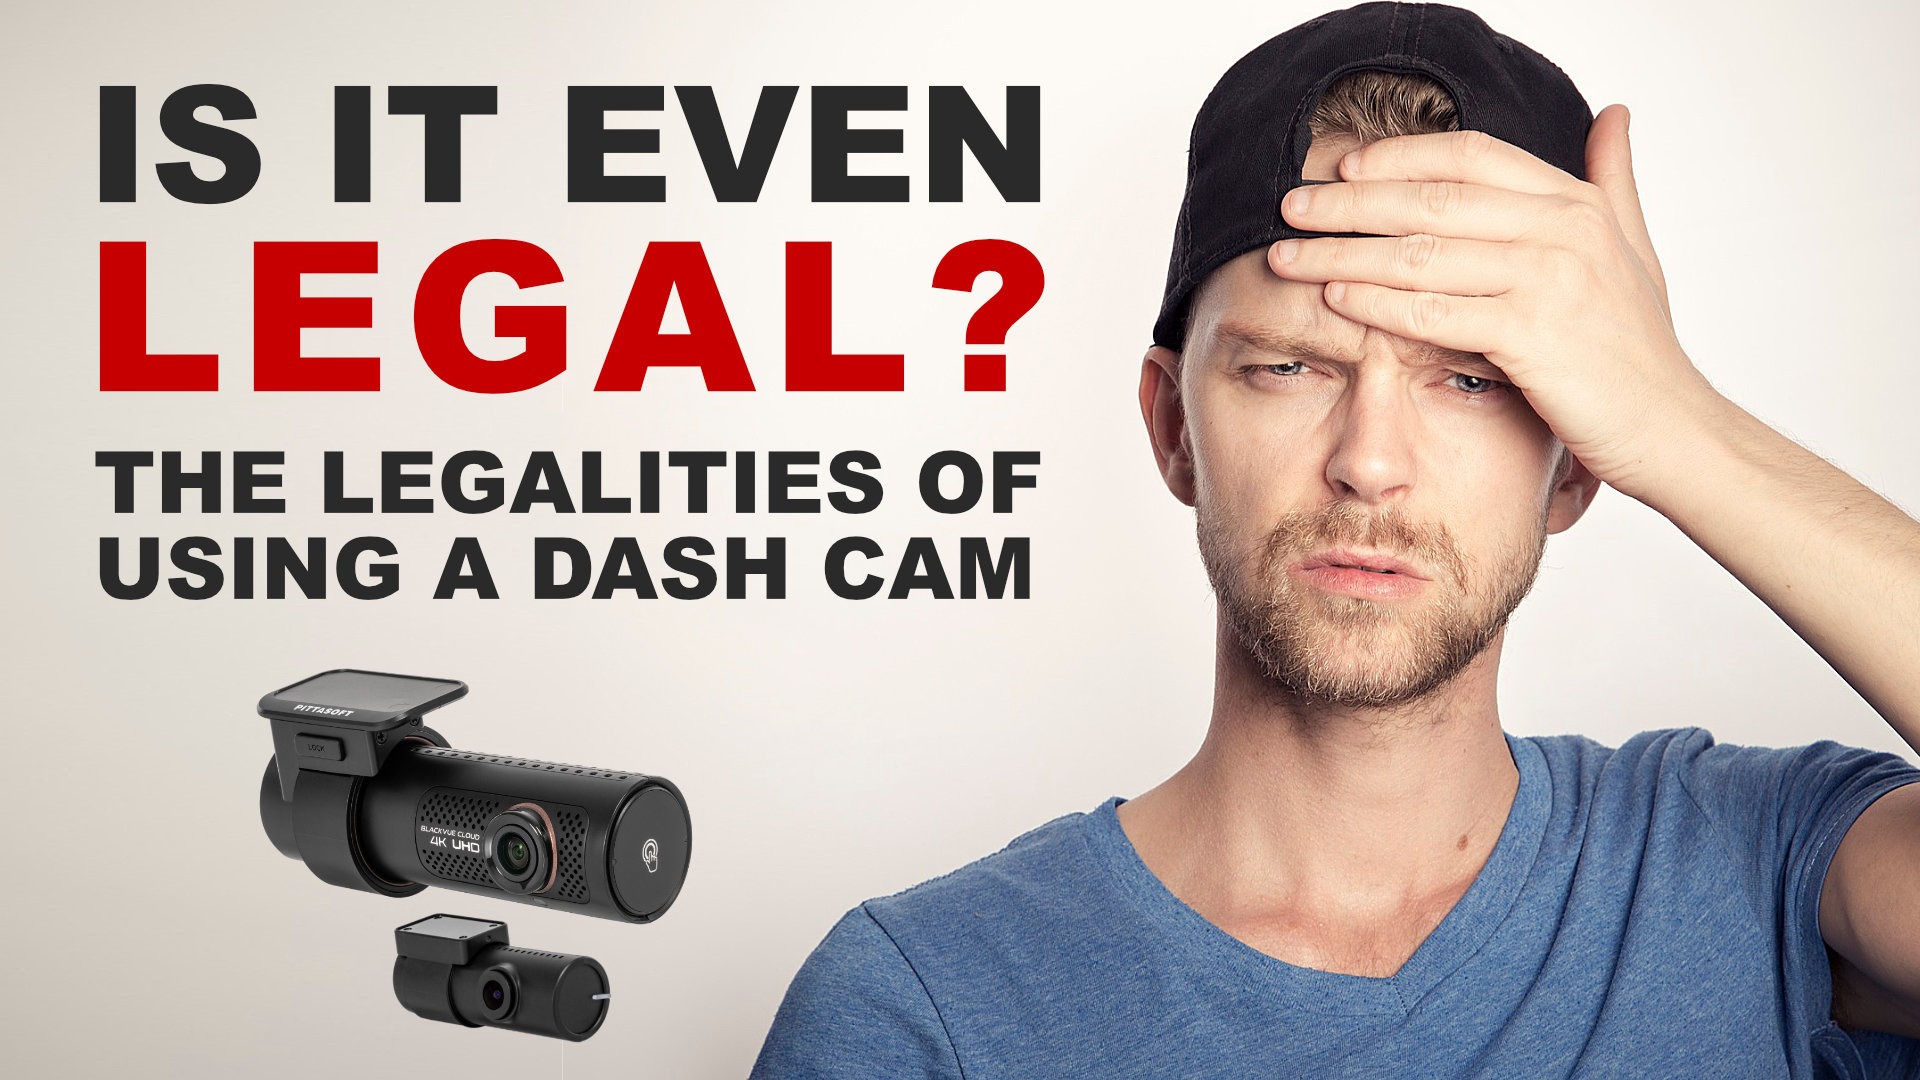 The Best Fleet Dash Cam Isn't Just a Dash Cam